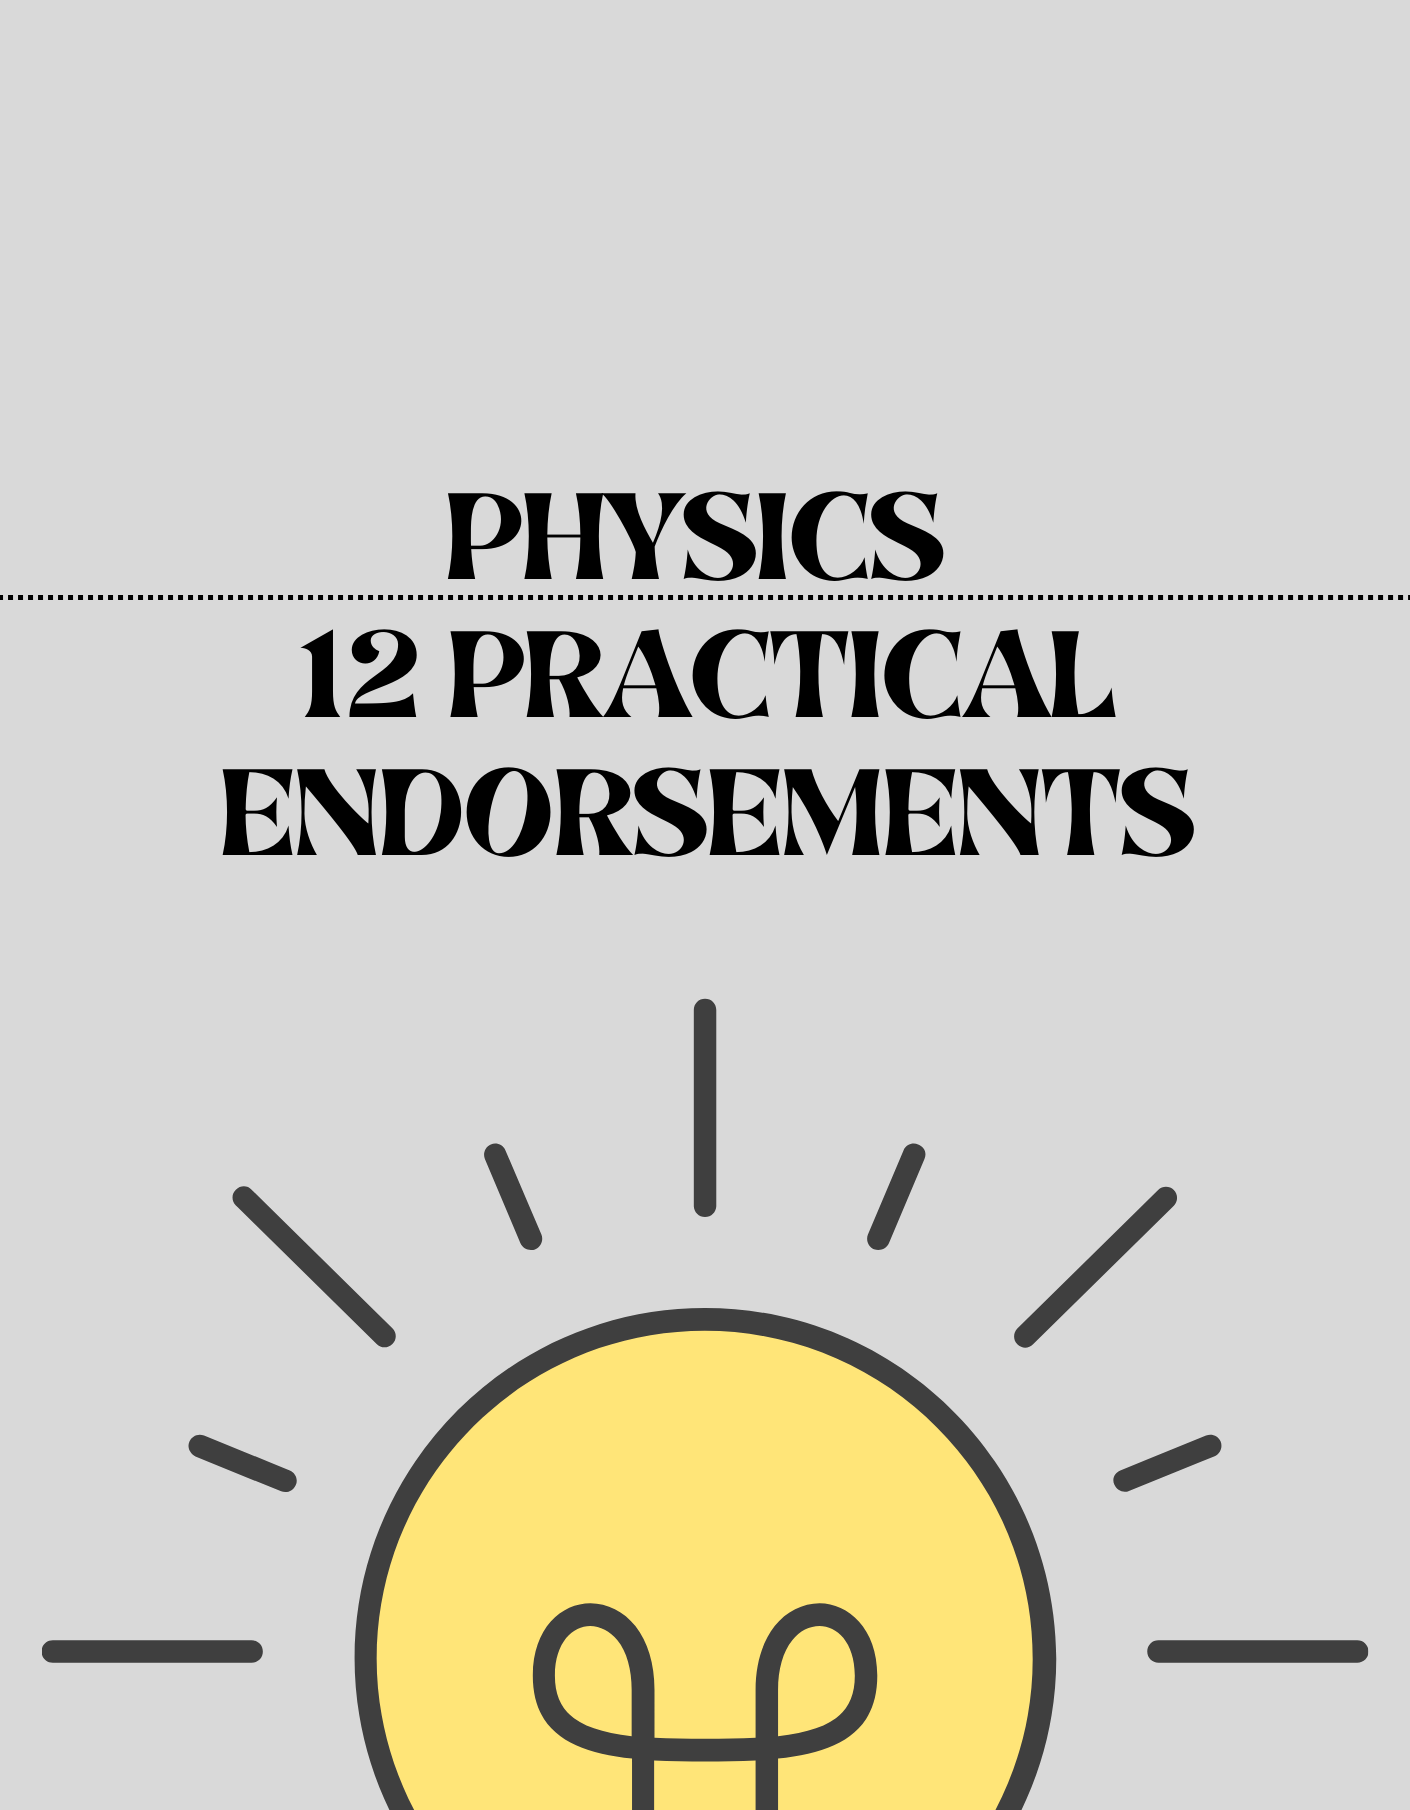 12 Practical Endorsements - Physics - Exam Centre Birmingham